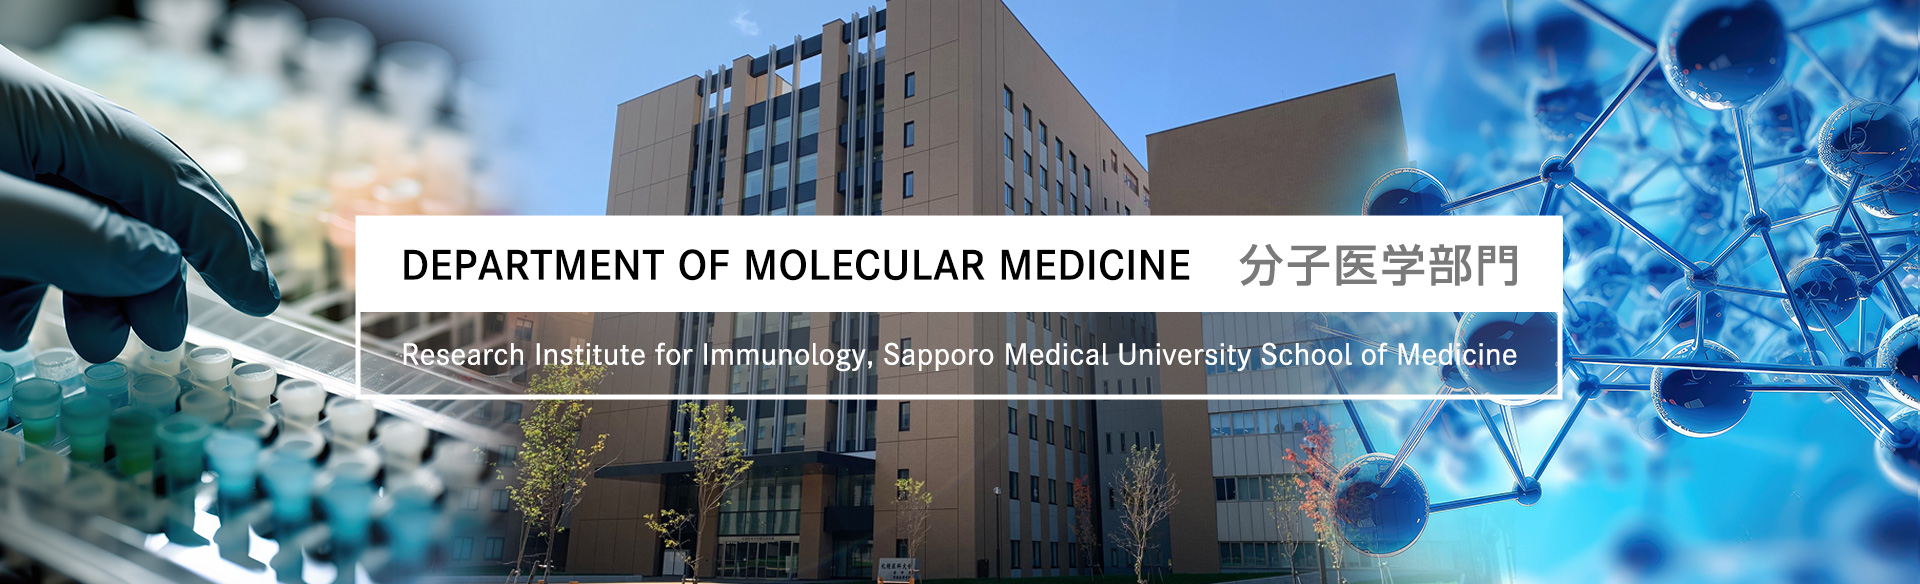 Department of Molecular Medicine　分子医学部門 / Research Institute for Frontier Medicine, Sapporo Medical University School of Medicine